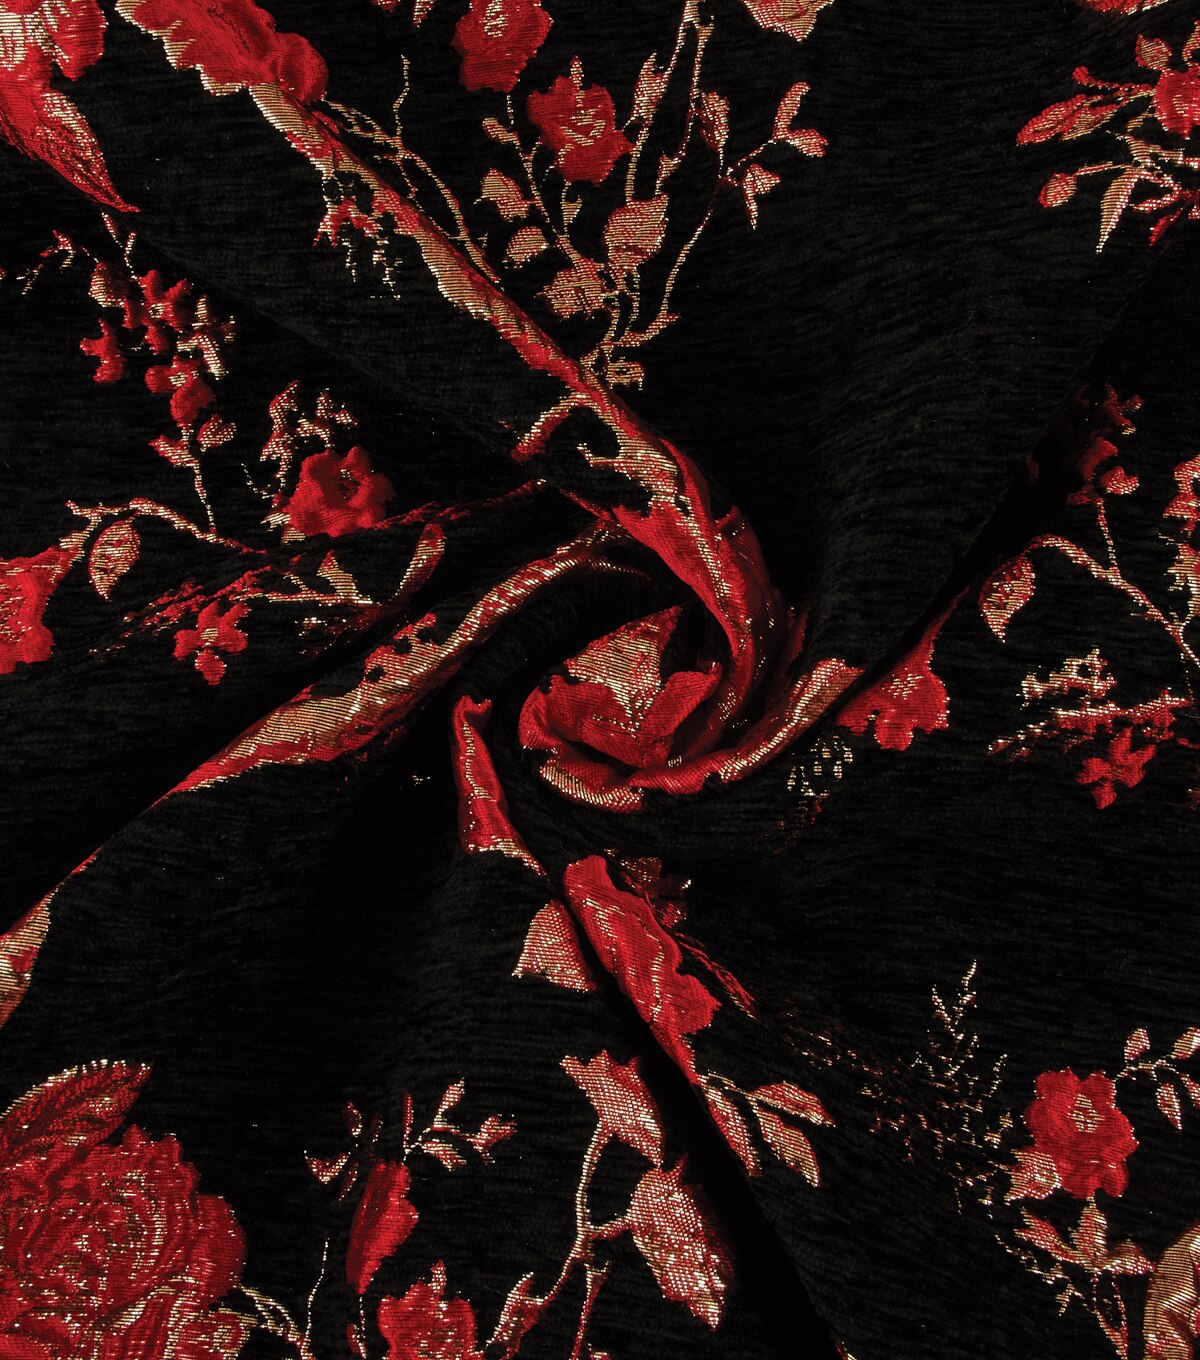 Yaya Han Collection Velvet Floral Brocade Red | JOANN